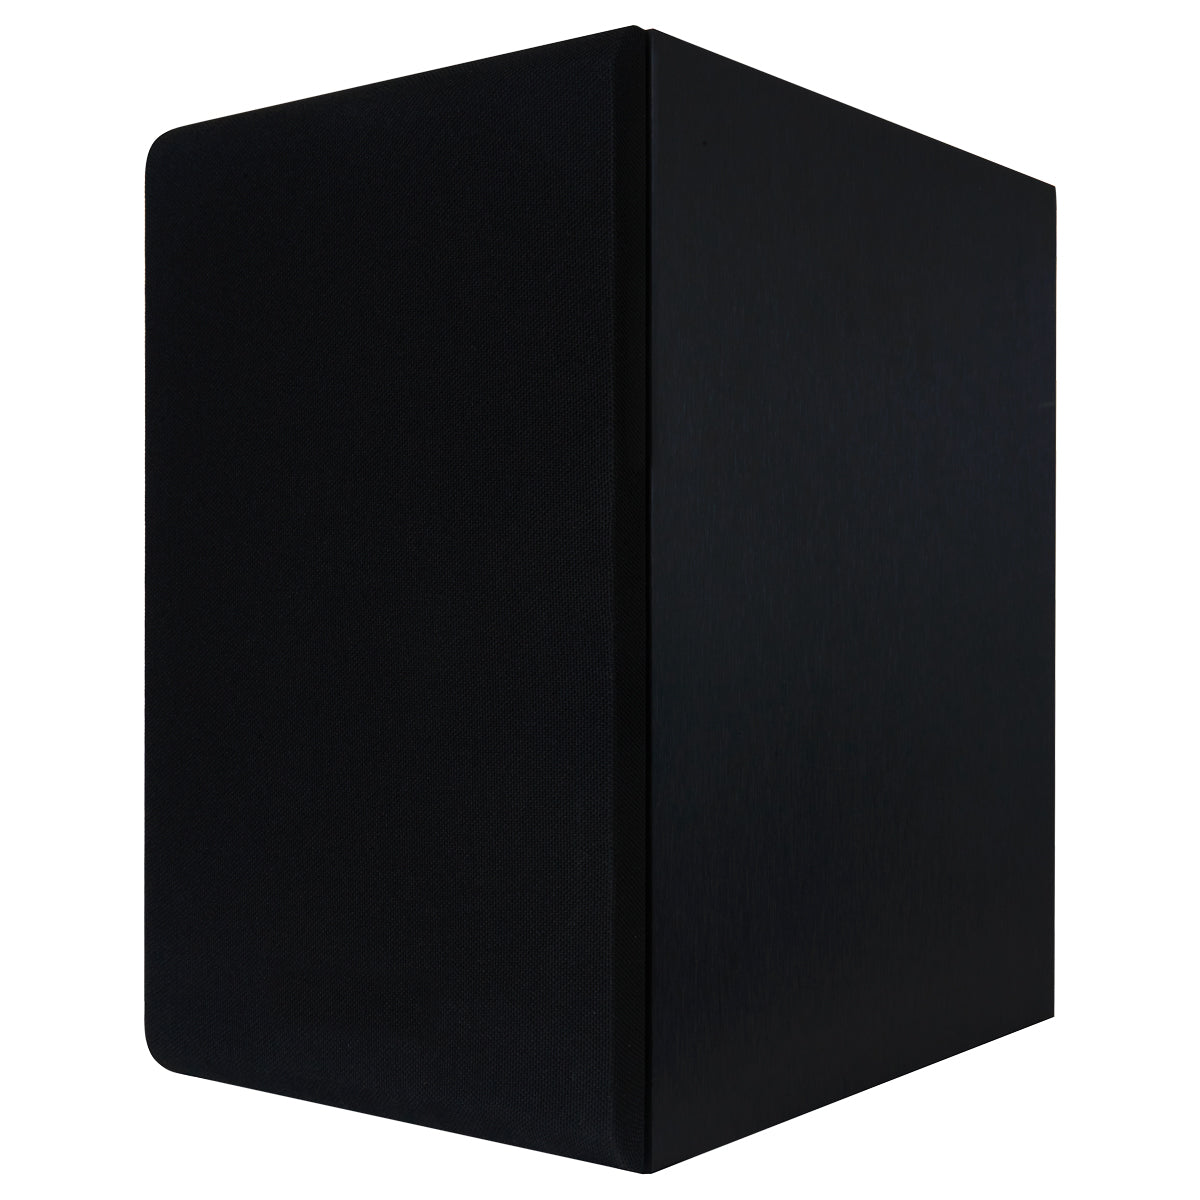 Whatmough Emotion WEBS65 6.5" Bookshelf Speakers - Black - The Audio Experts